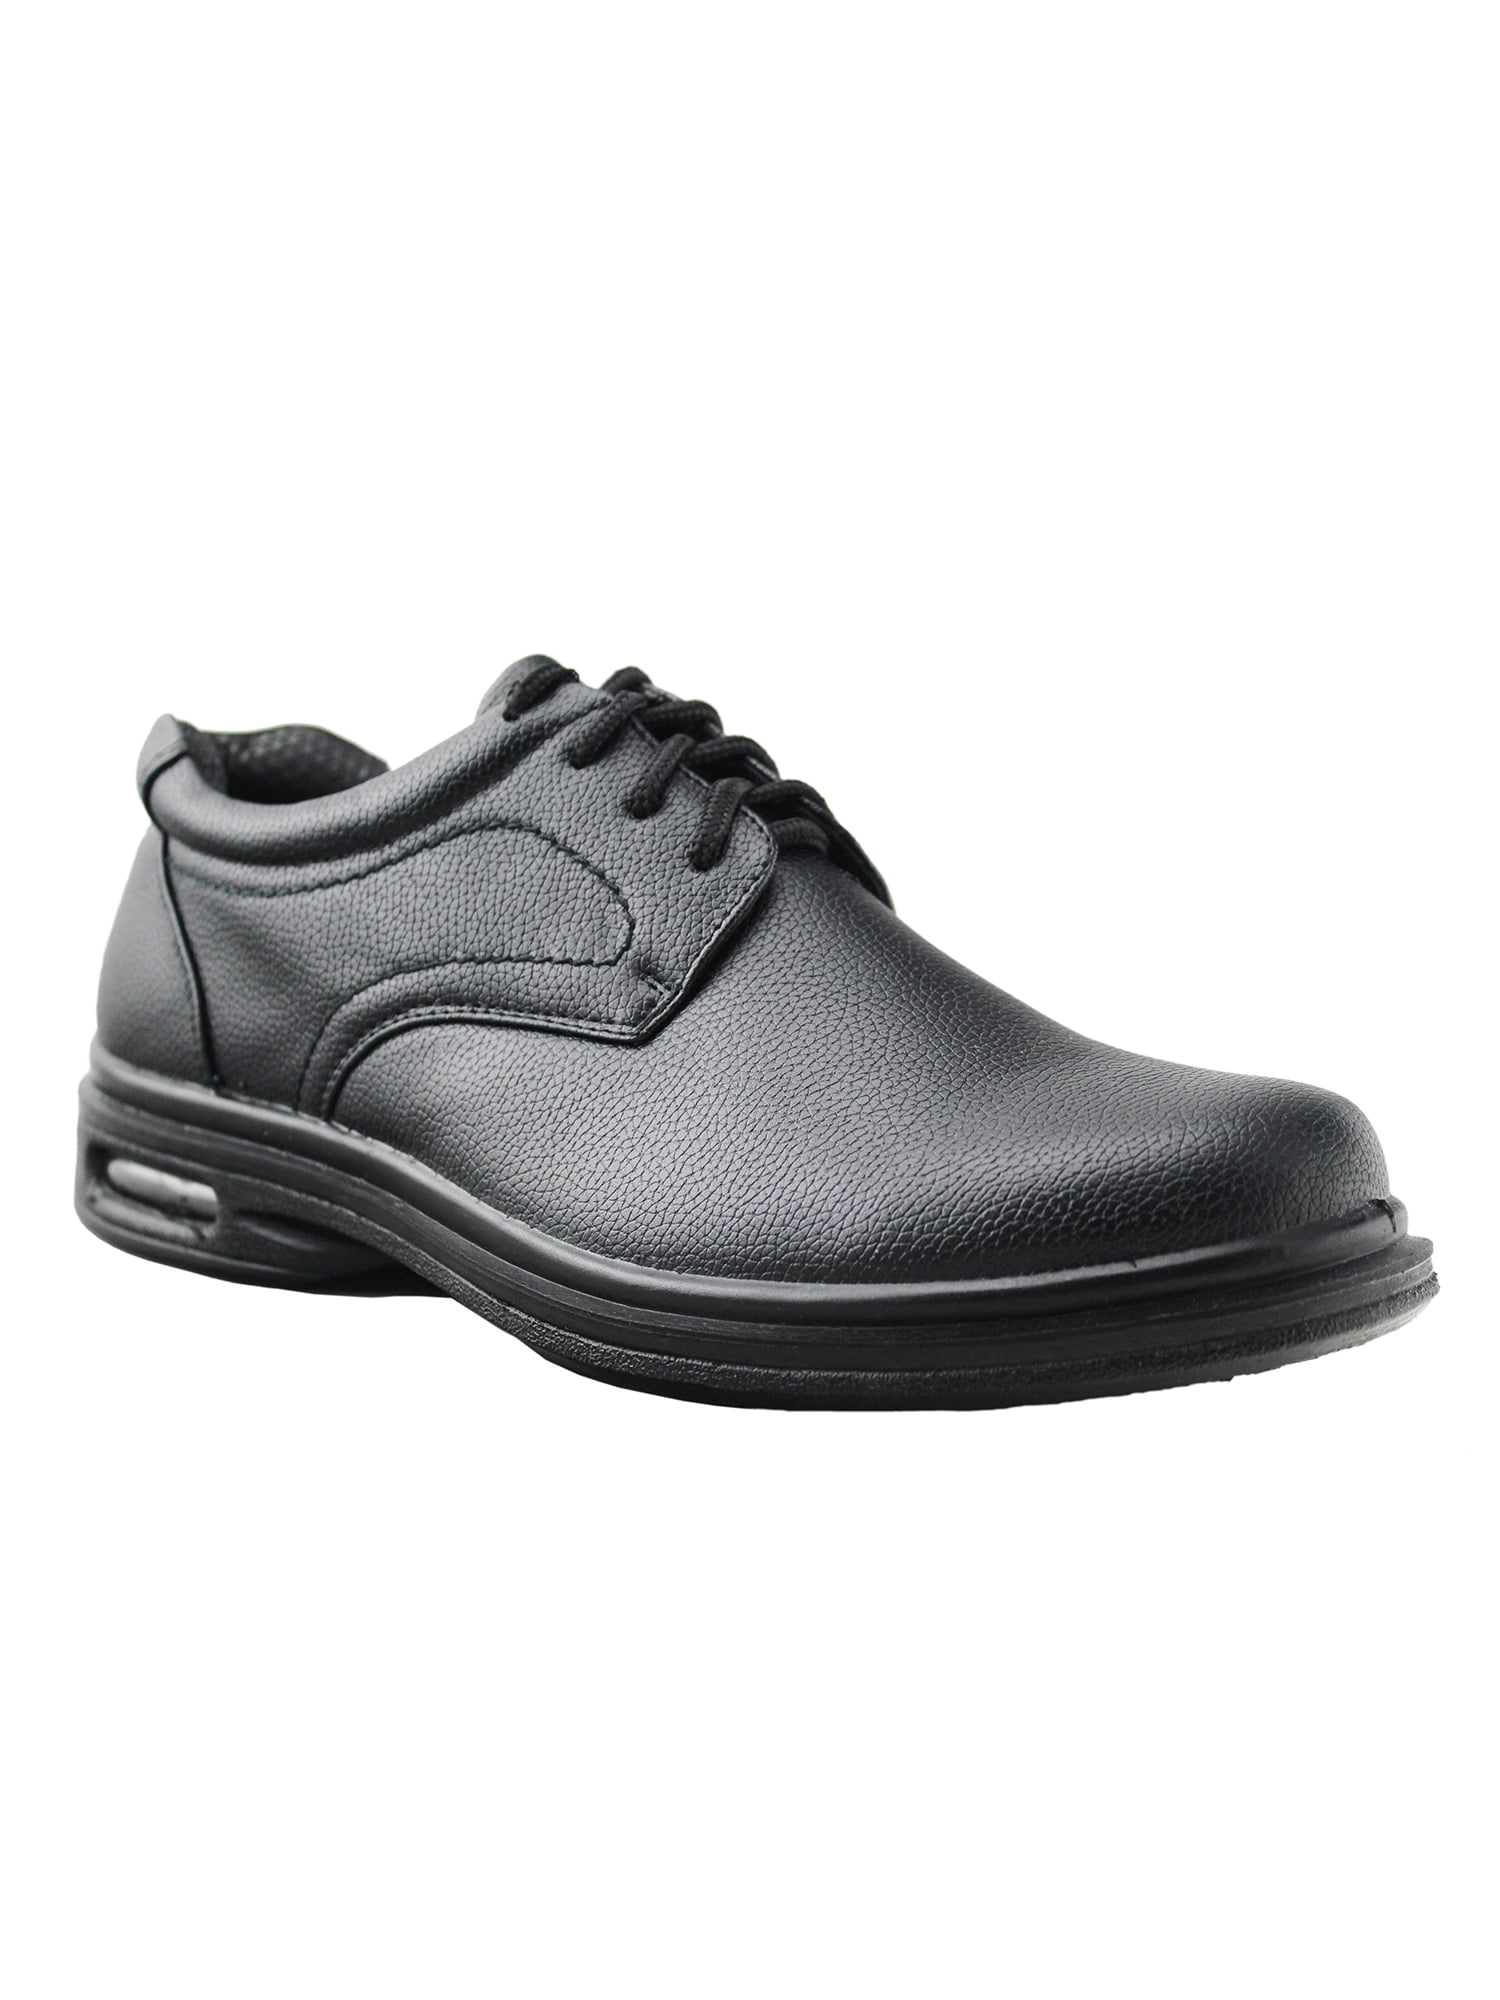 black work shoes mens walmart